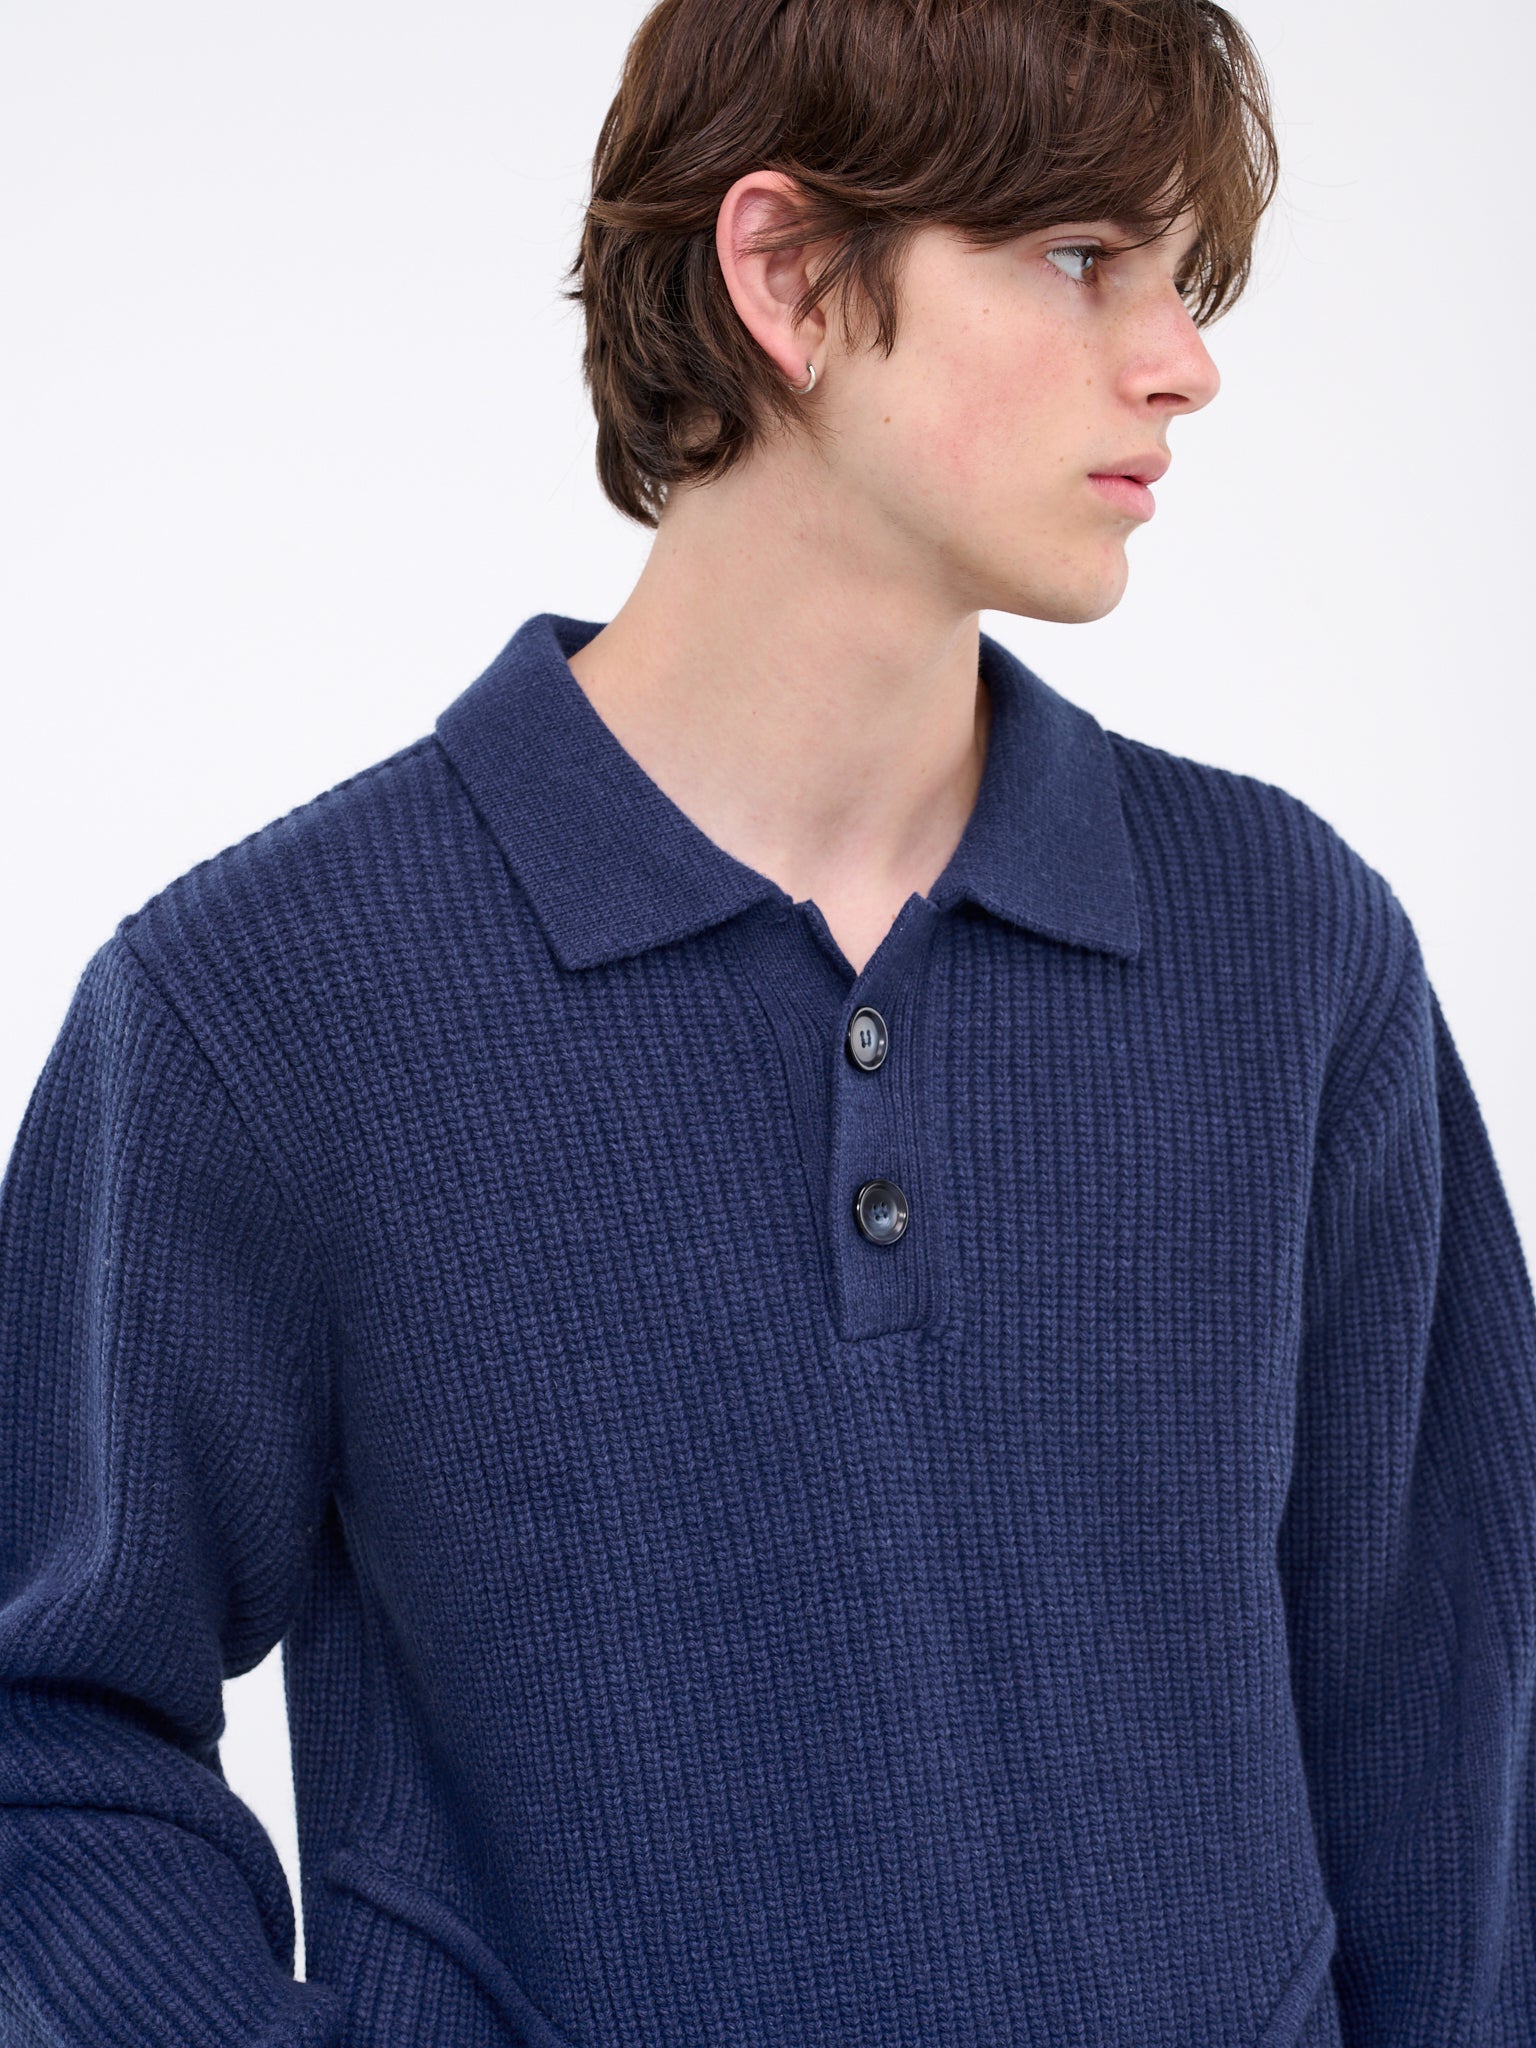 Corset Sweater (NT01-NAVY)